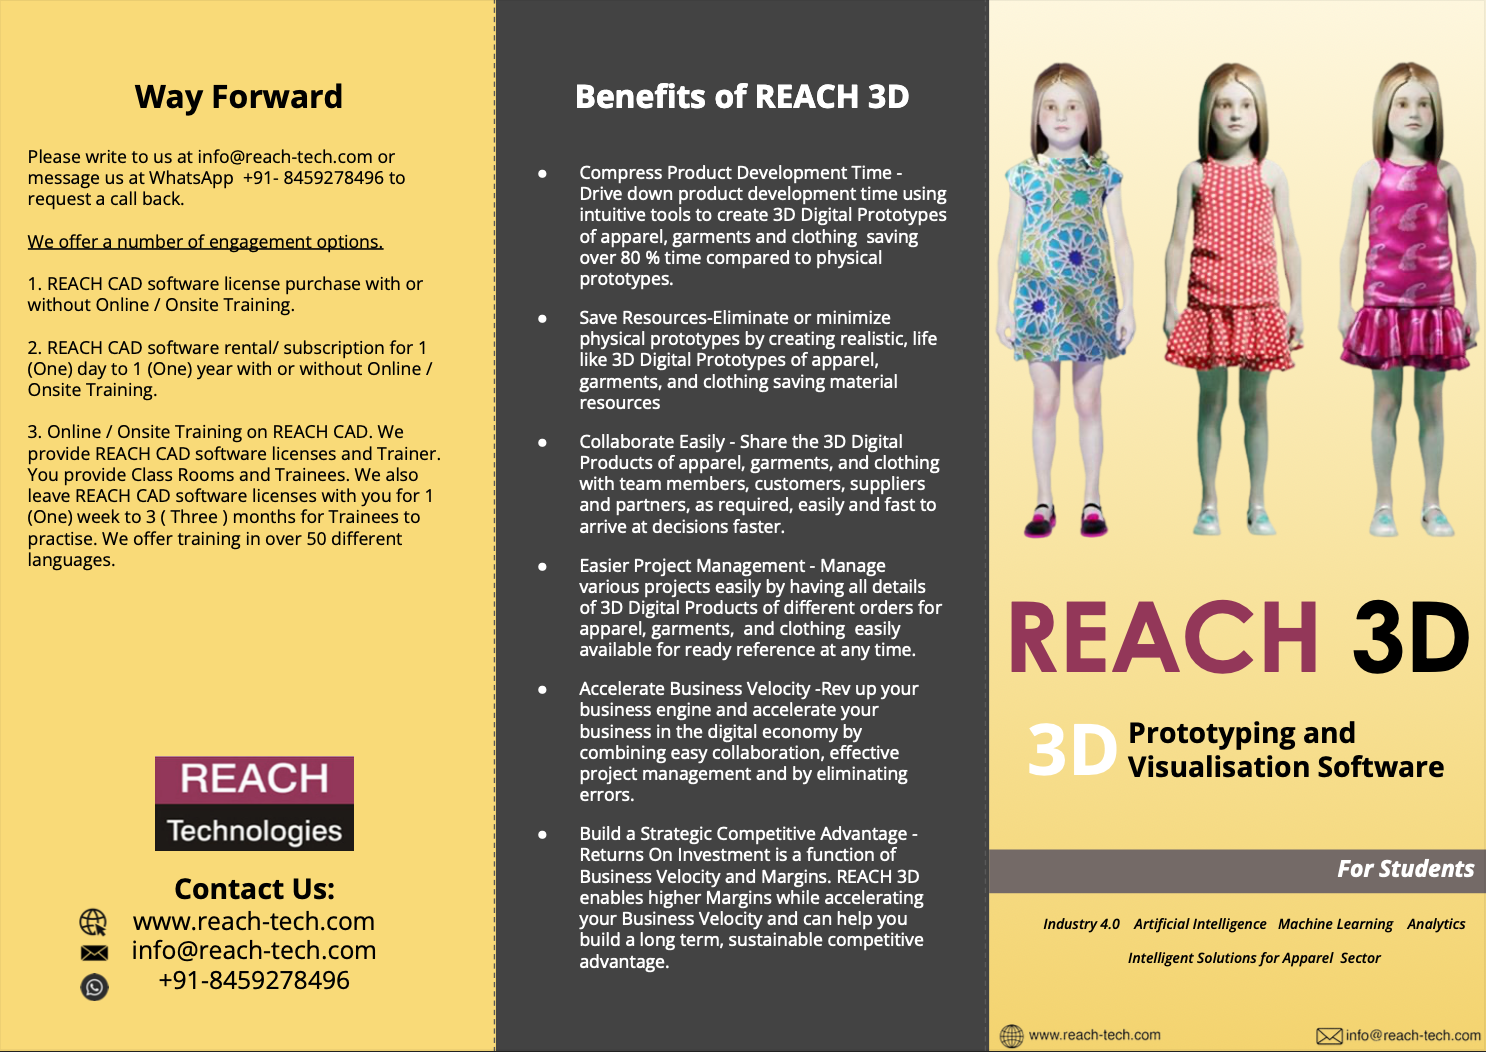 REACH 3D Student Brochure Image